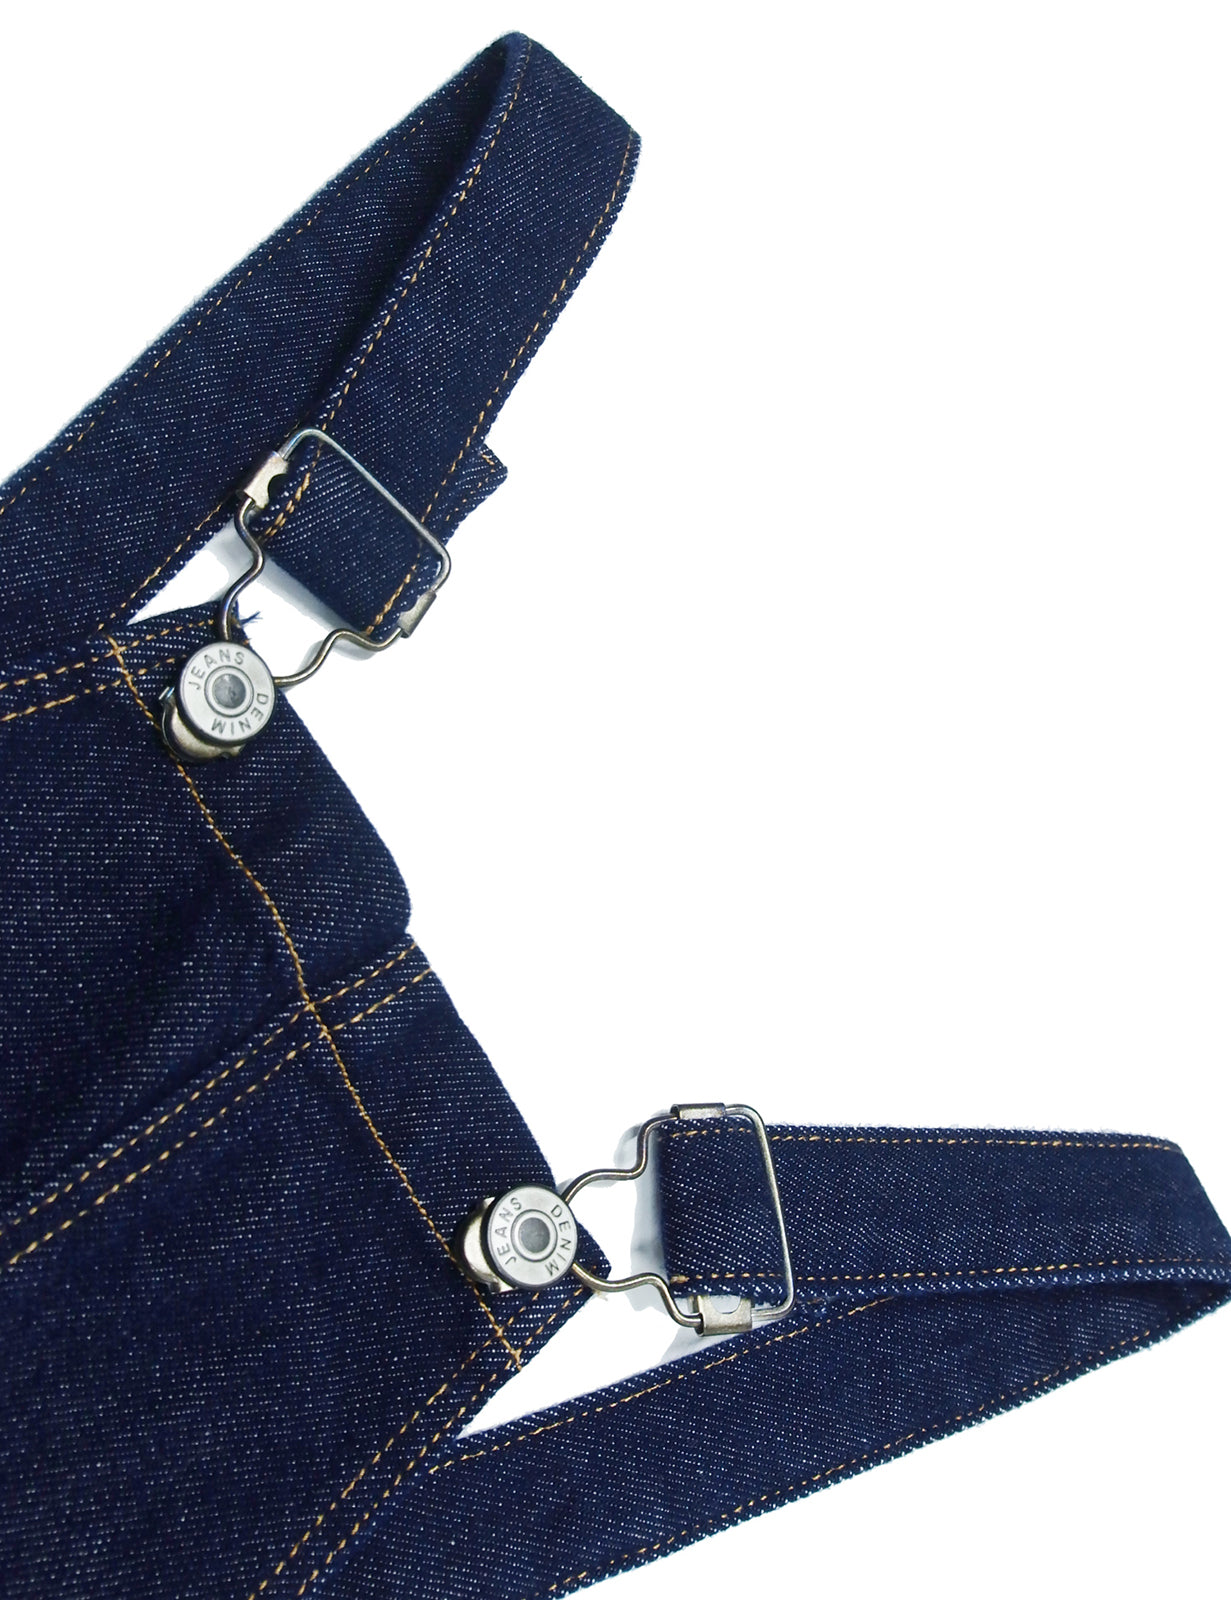 Kid Boy Girl Small Bib Pocket Adjustable Straps Soft Jean Overalls